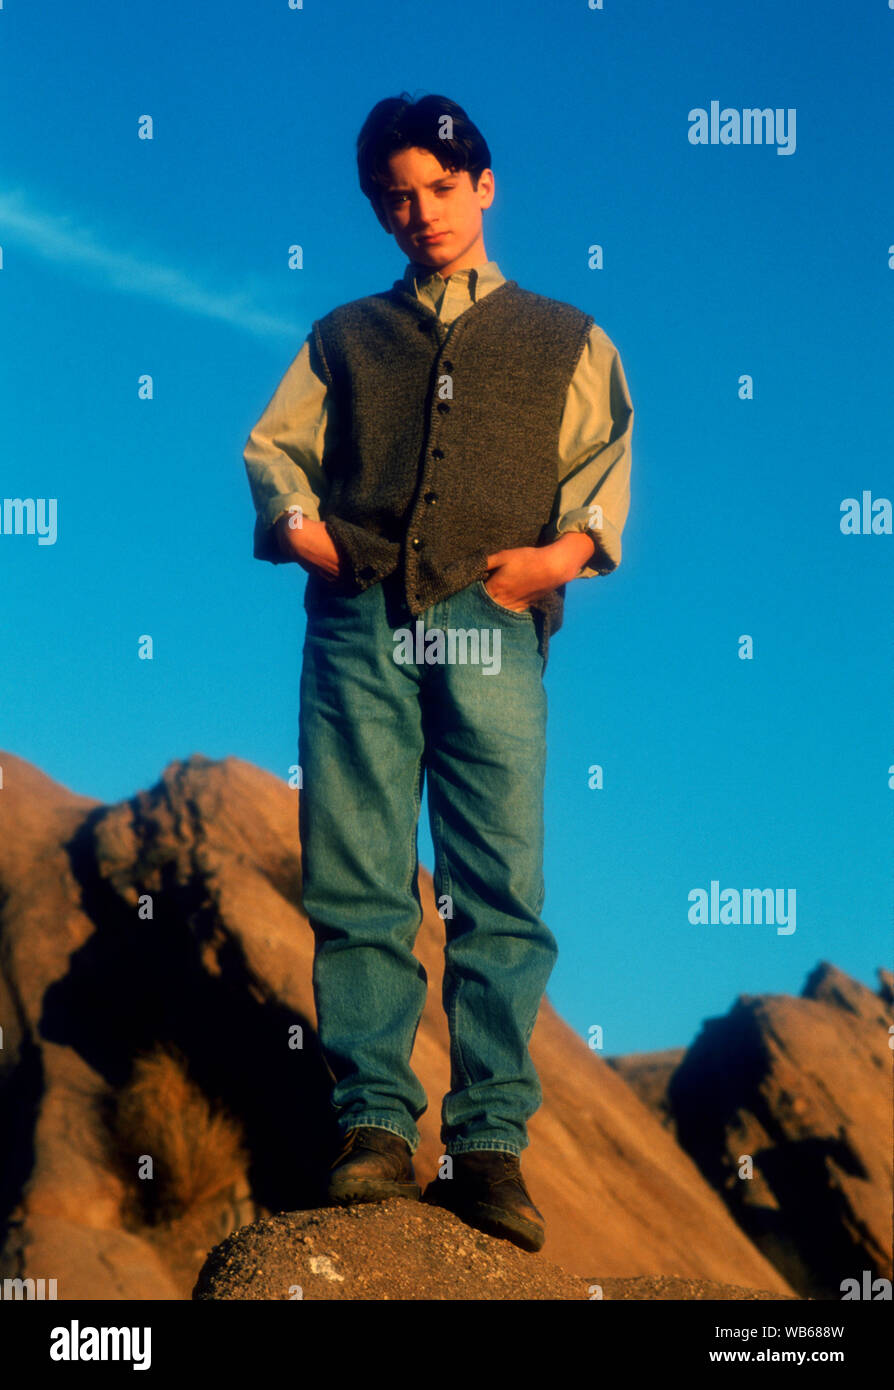 Los Angeles, California, USA 9th November 1994 (Exclusive) Actor Elijah Wood poses at a photo shoot on November 9, 1994 in Los Angeles, California, USA. Photo by Barry King/Alamy Stock Photo Stock Photo